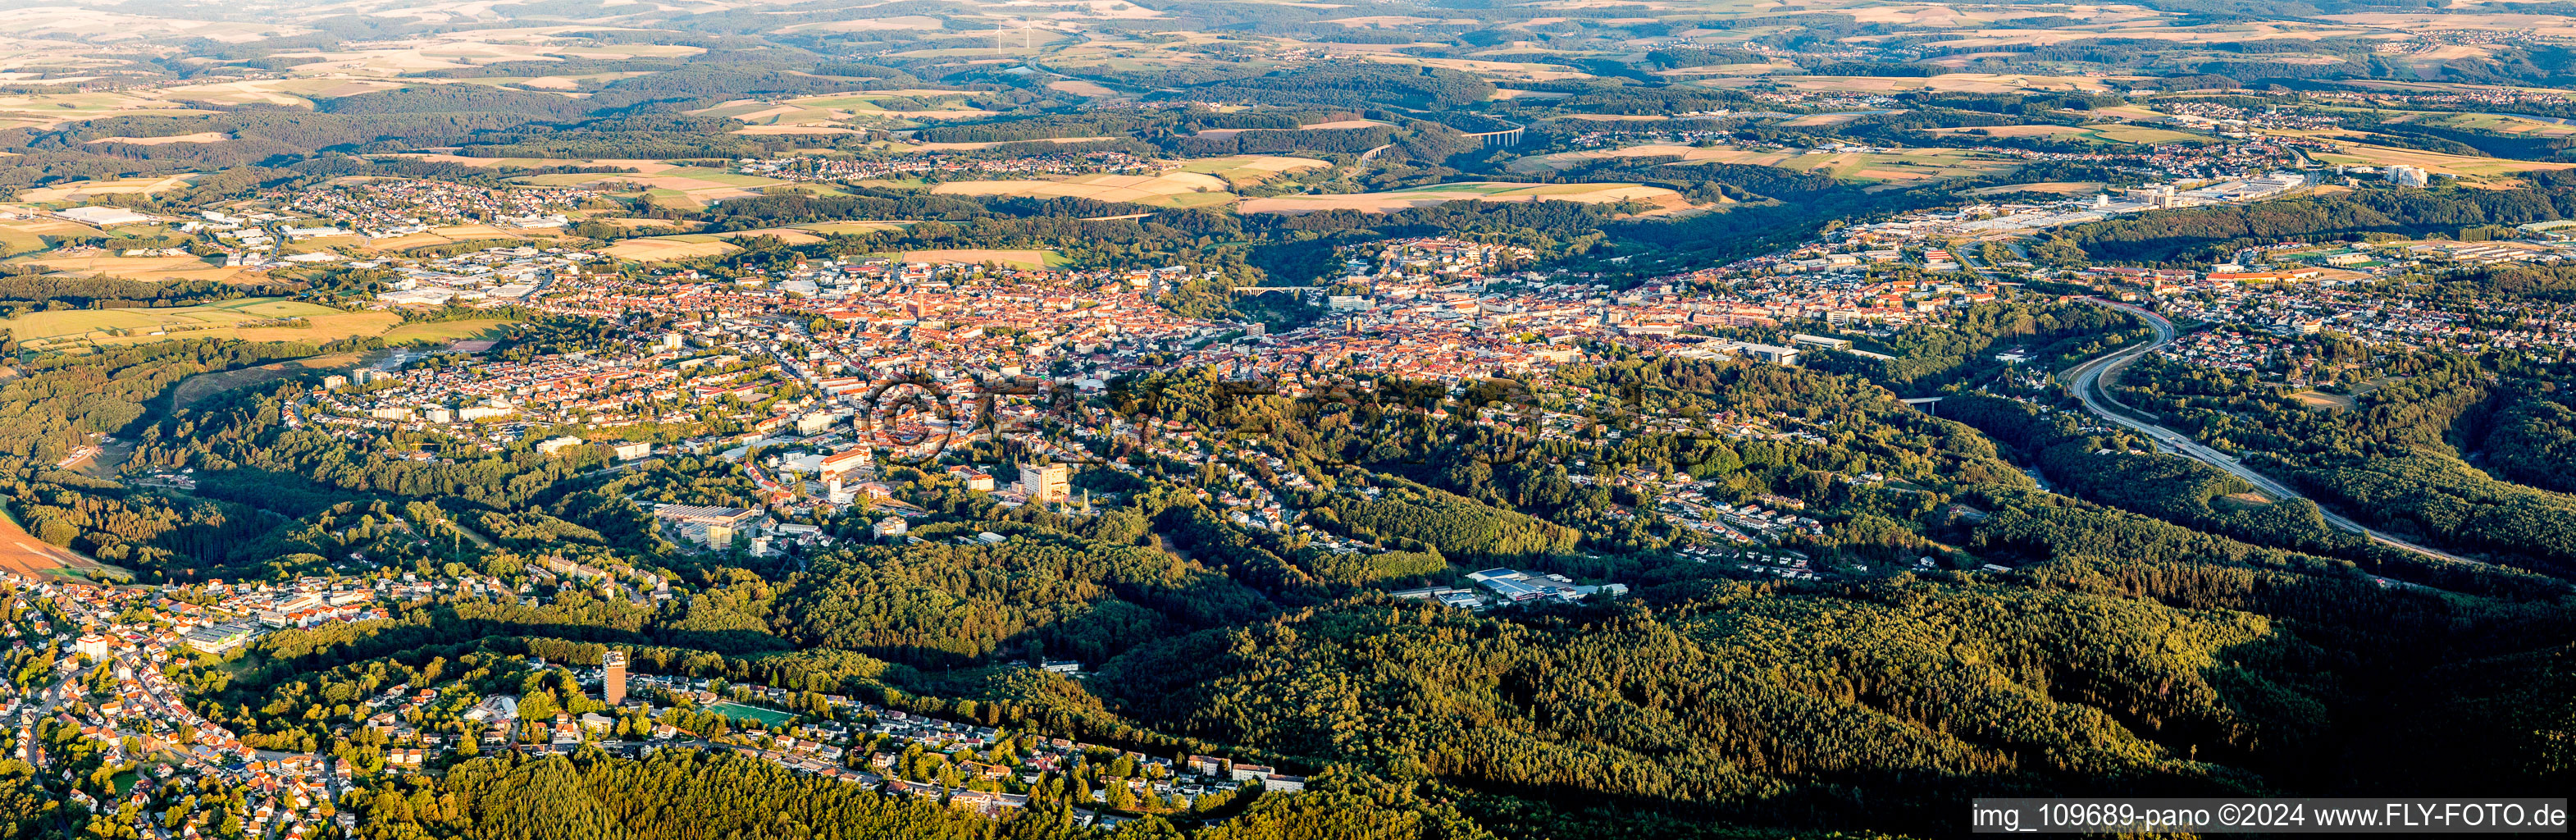 Panorama in Pirmasens in the state Rhineland-Palatinate, Germany